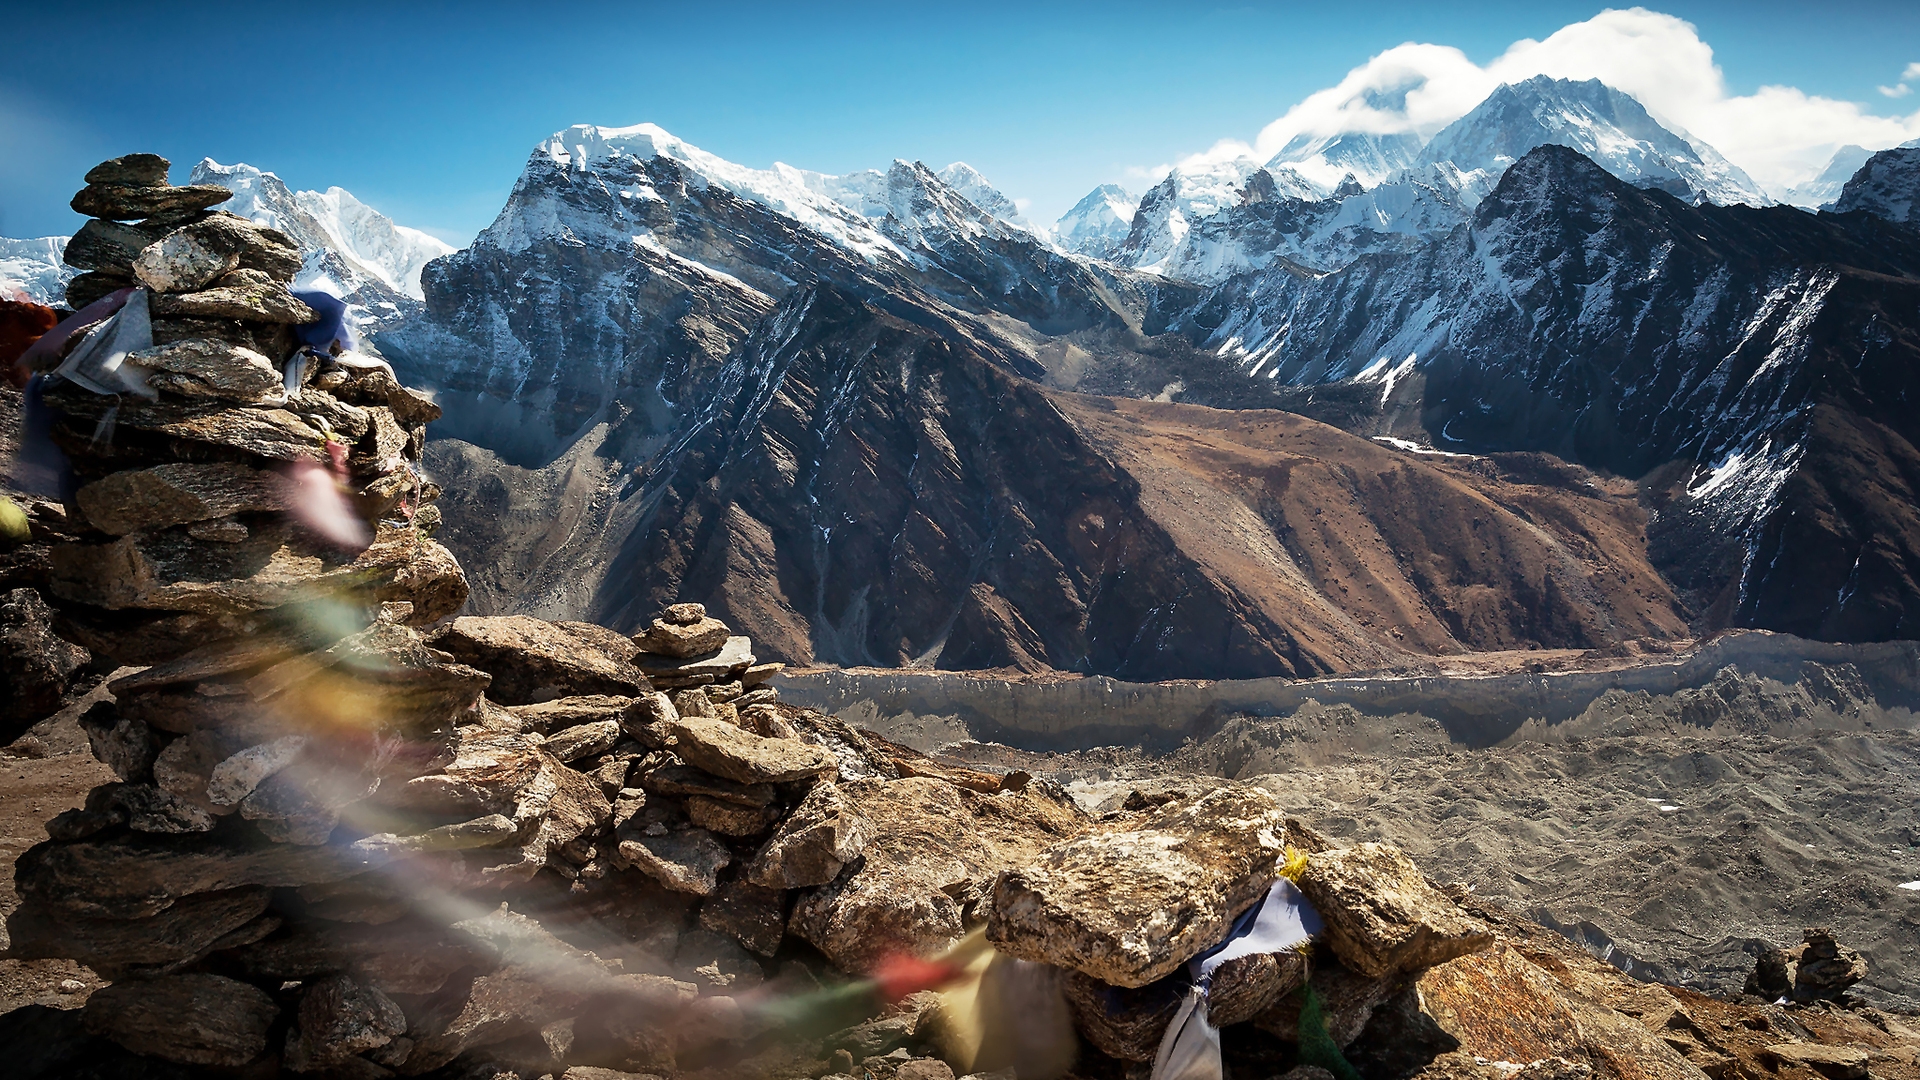 Tibet Mountains for 1920 x 1080 HDTV 1080p resolution